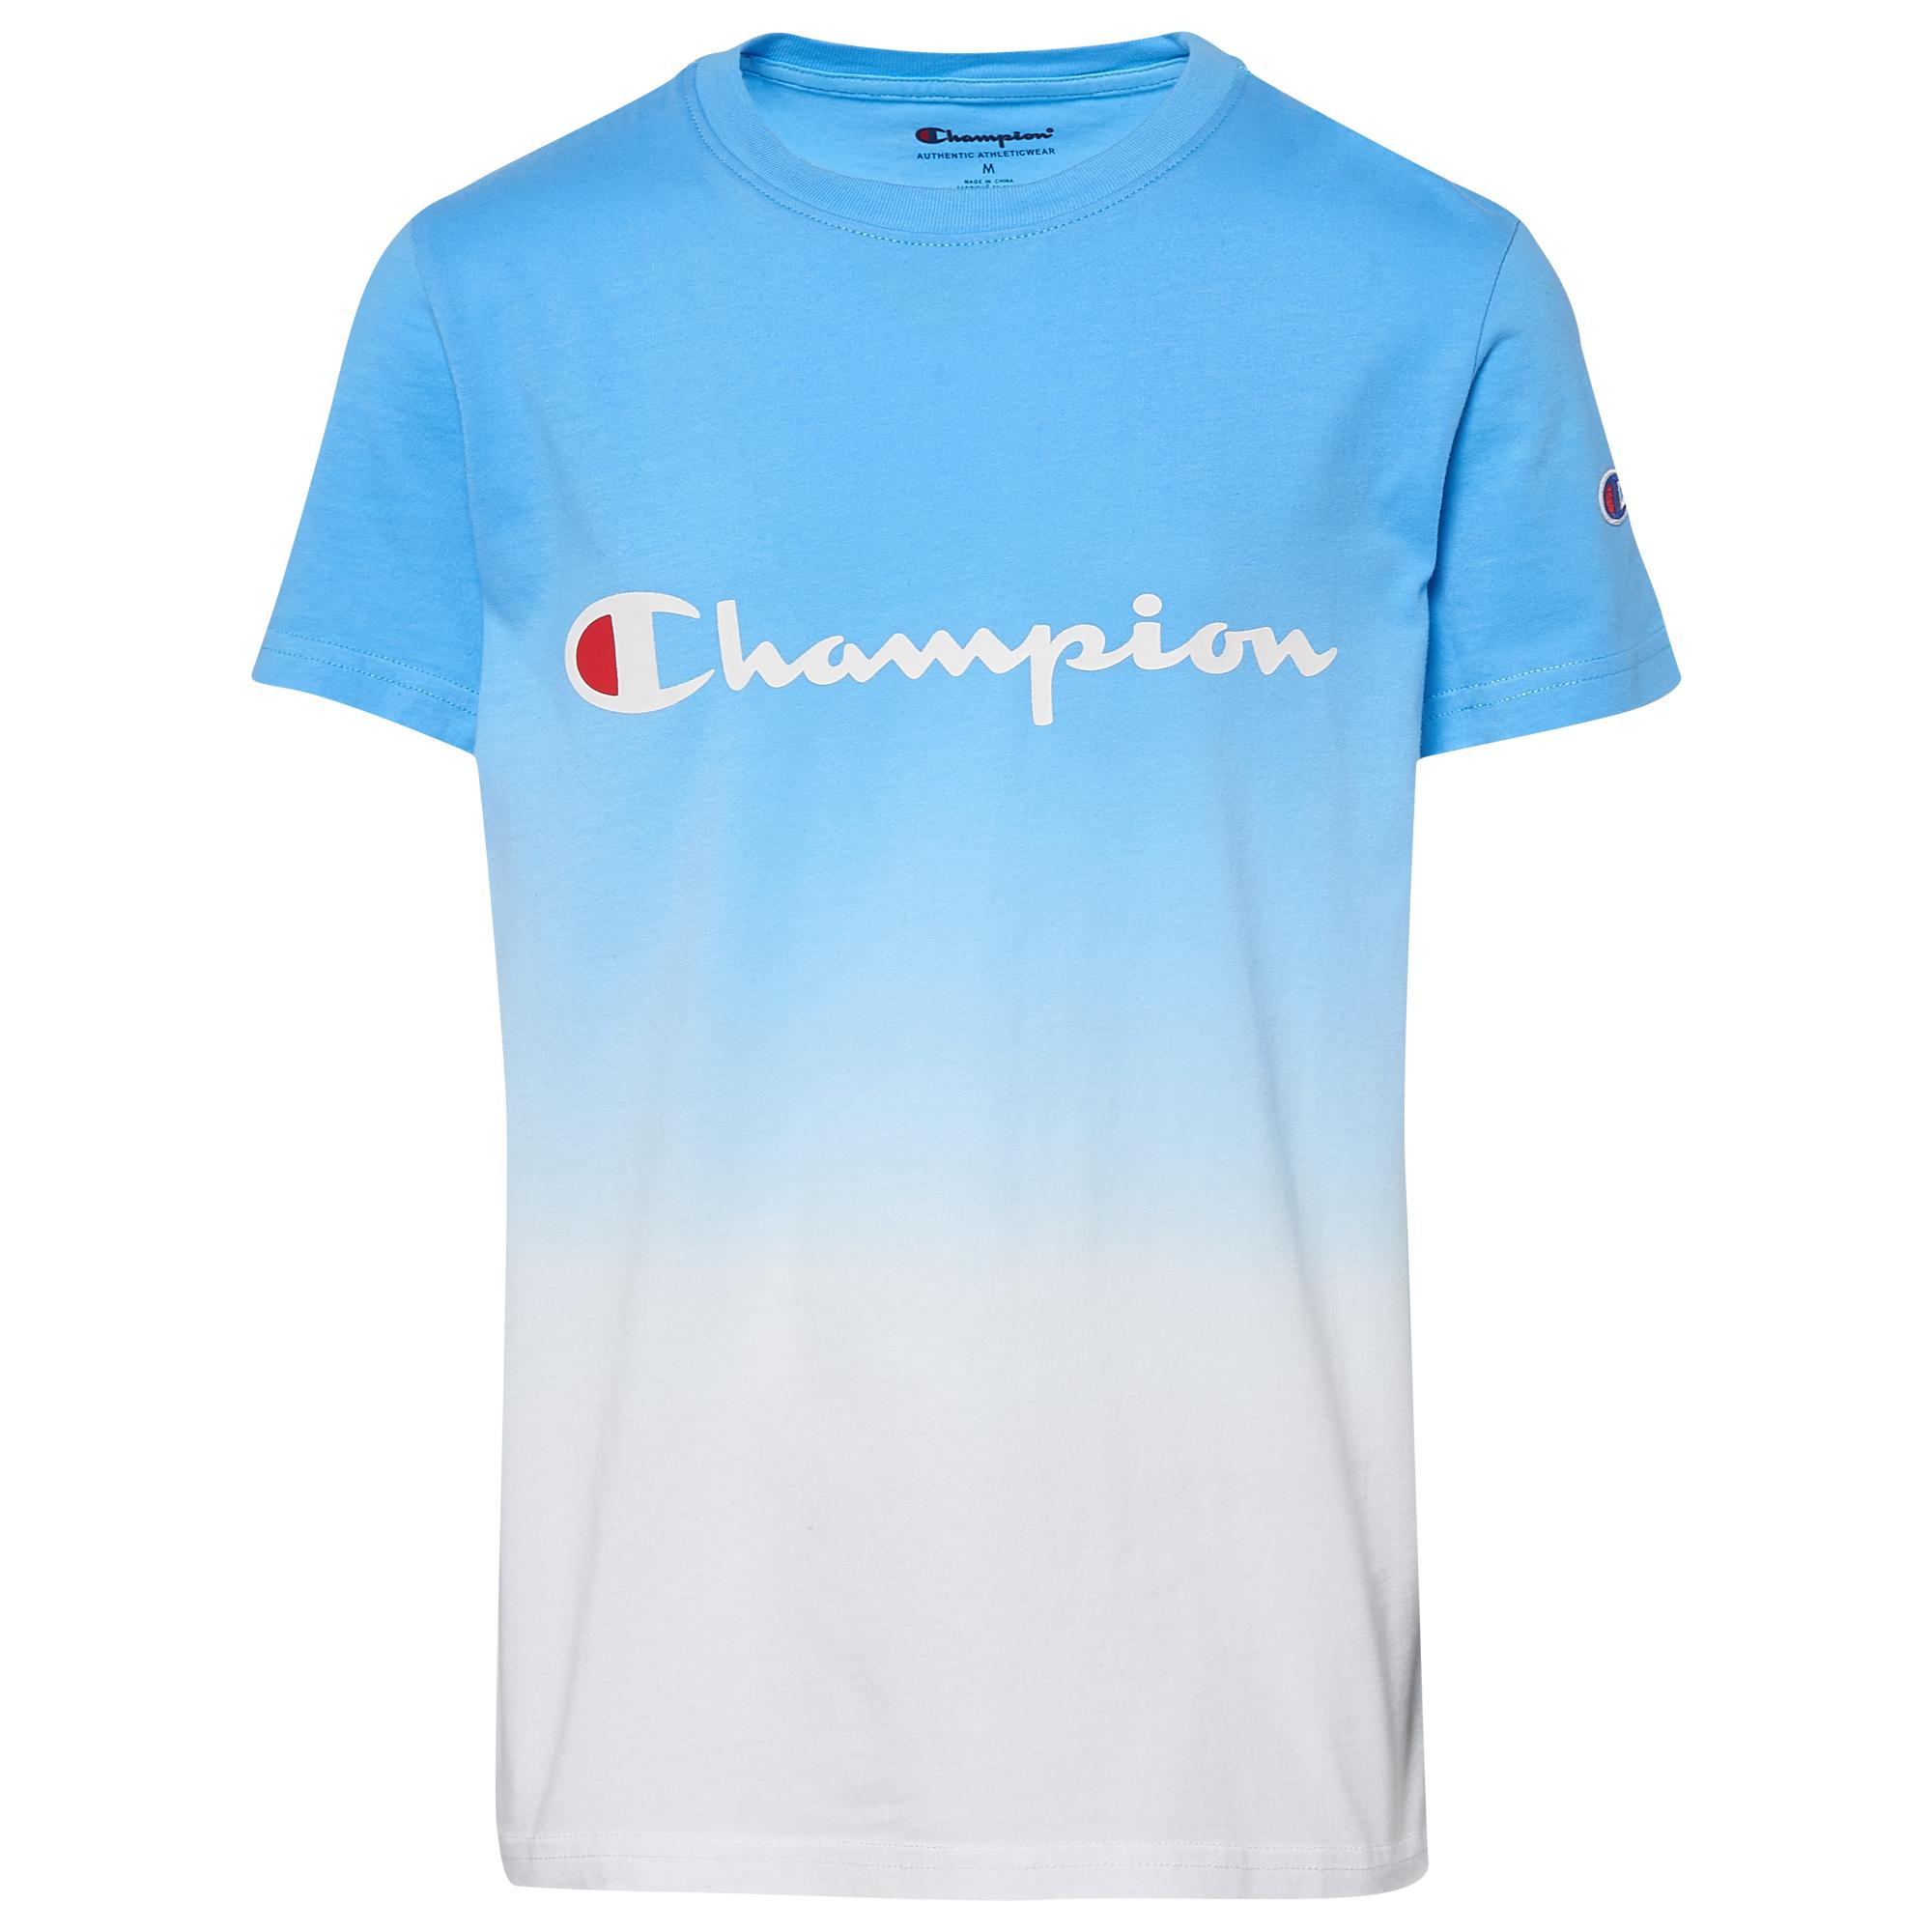 blue and white champion shirt